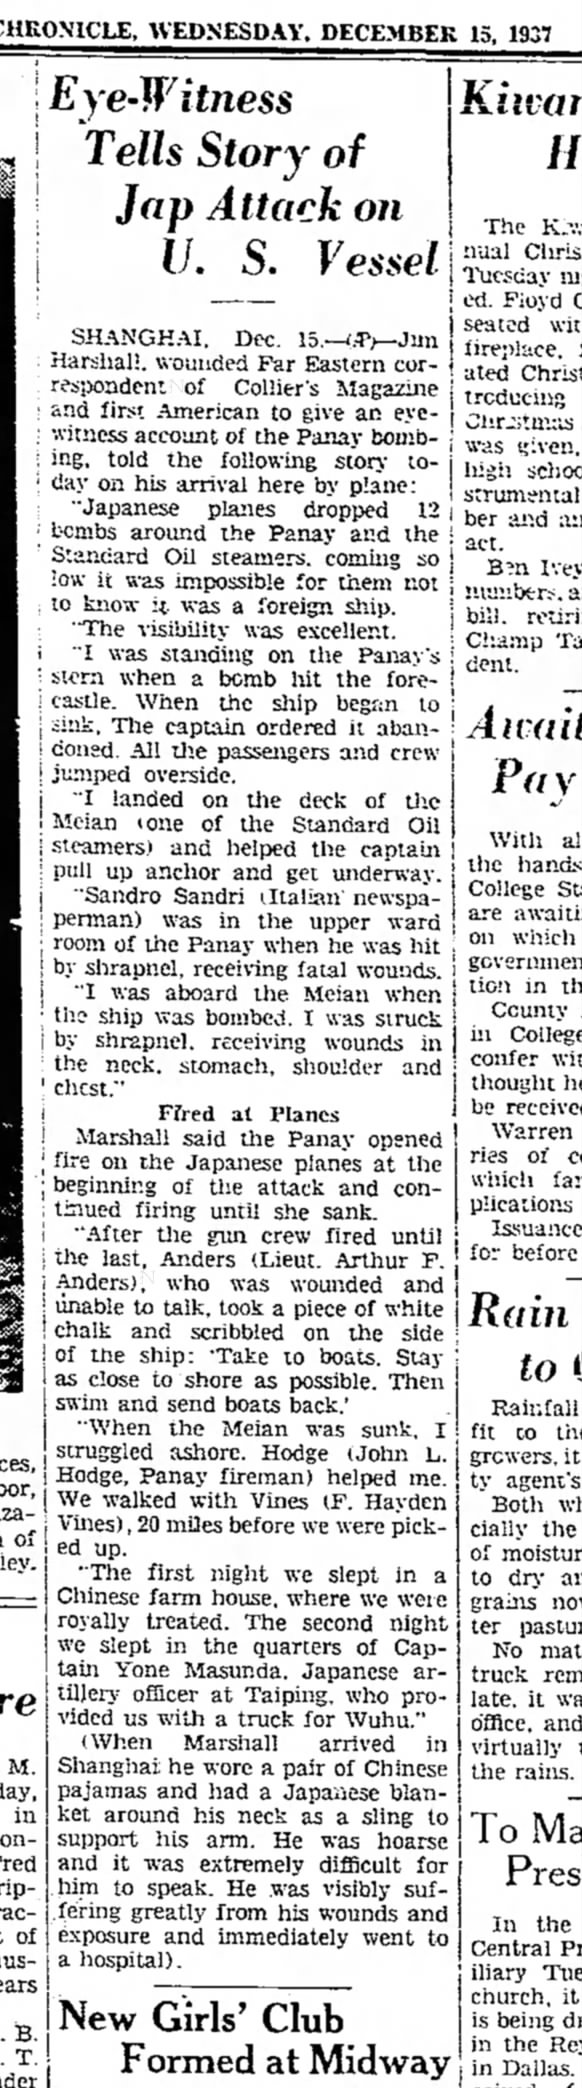 Panay2
Dec 15, 1937
Denton Record-Chronicle - Denton, Texas